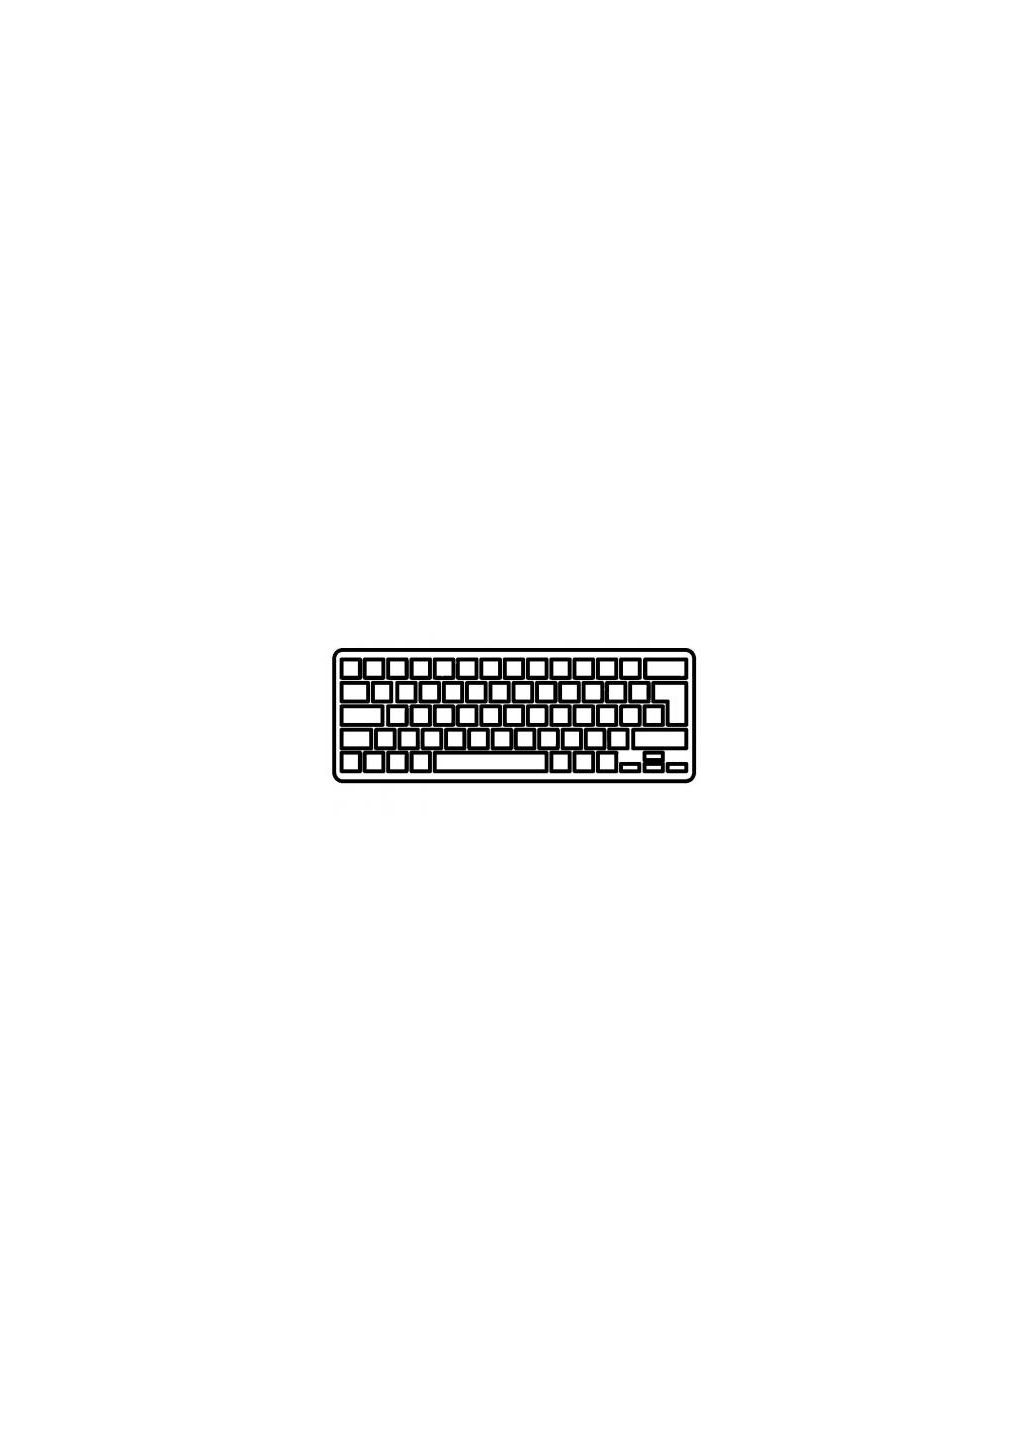 Клавиатура ноутбука ная RU (A43004) Acer aspire 3100/5100/5610/9110/extensa 5200 series чер (276707575)